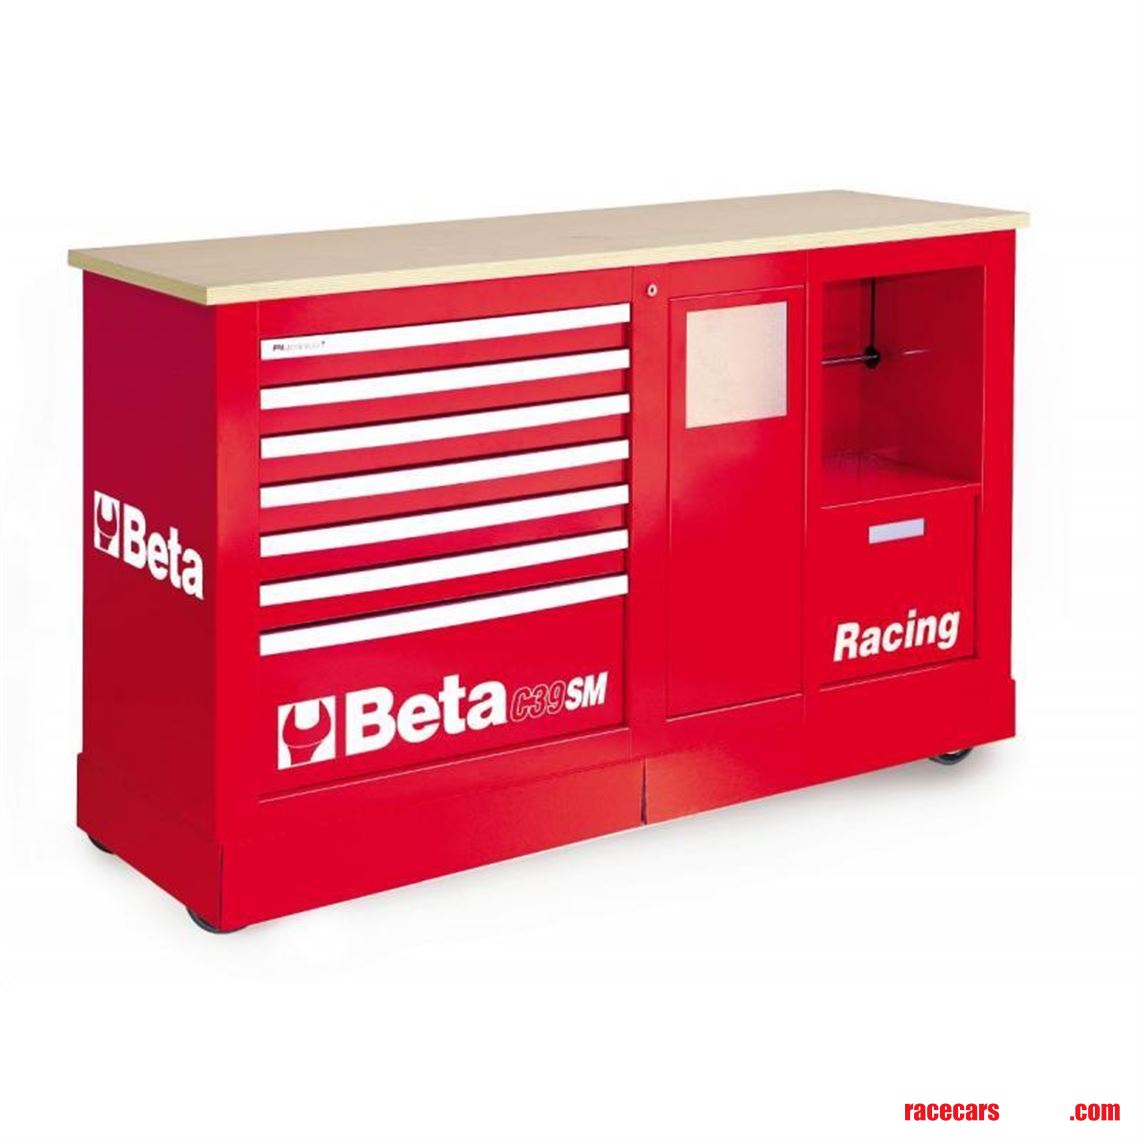 beta-c39sm-racing-toolbox